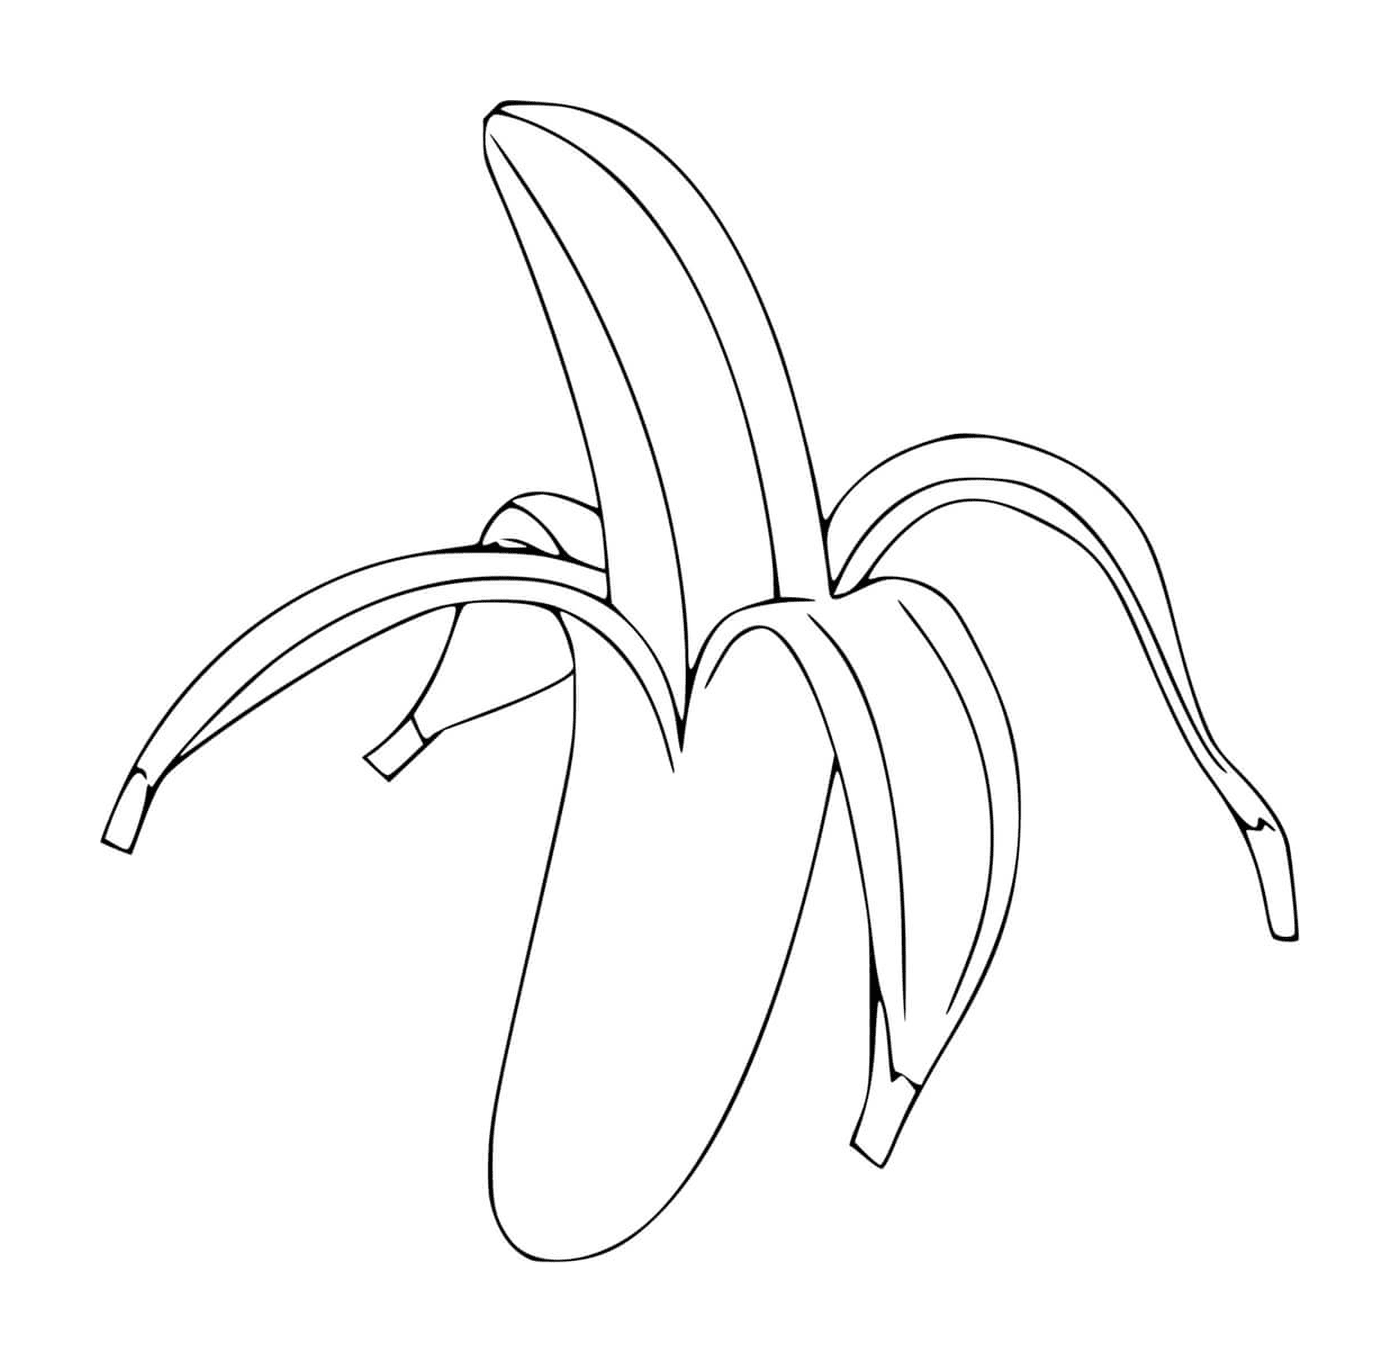  Невооруженный банан 